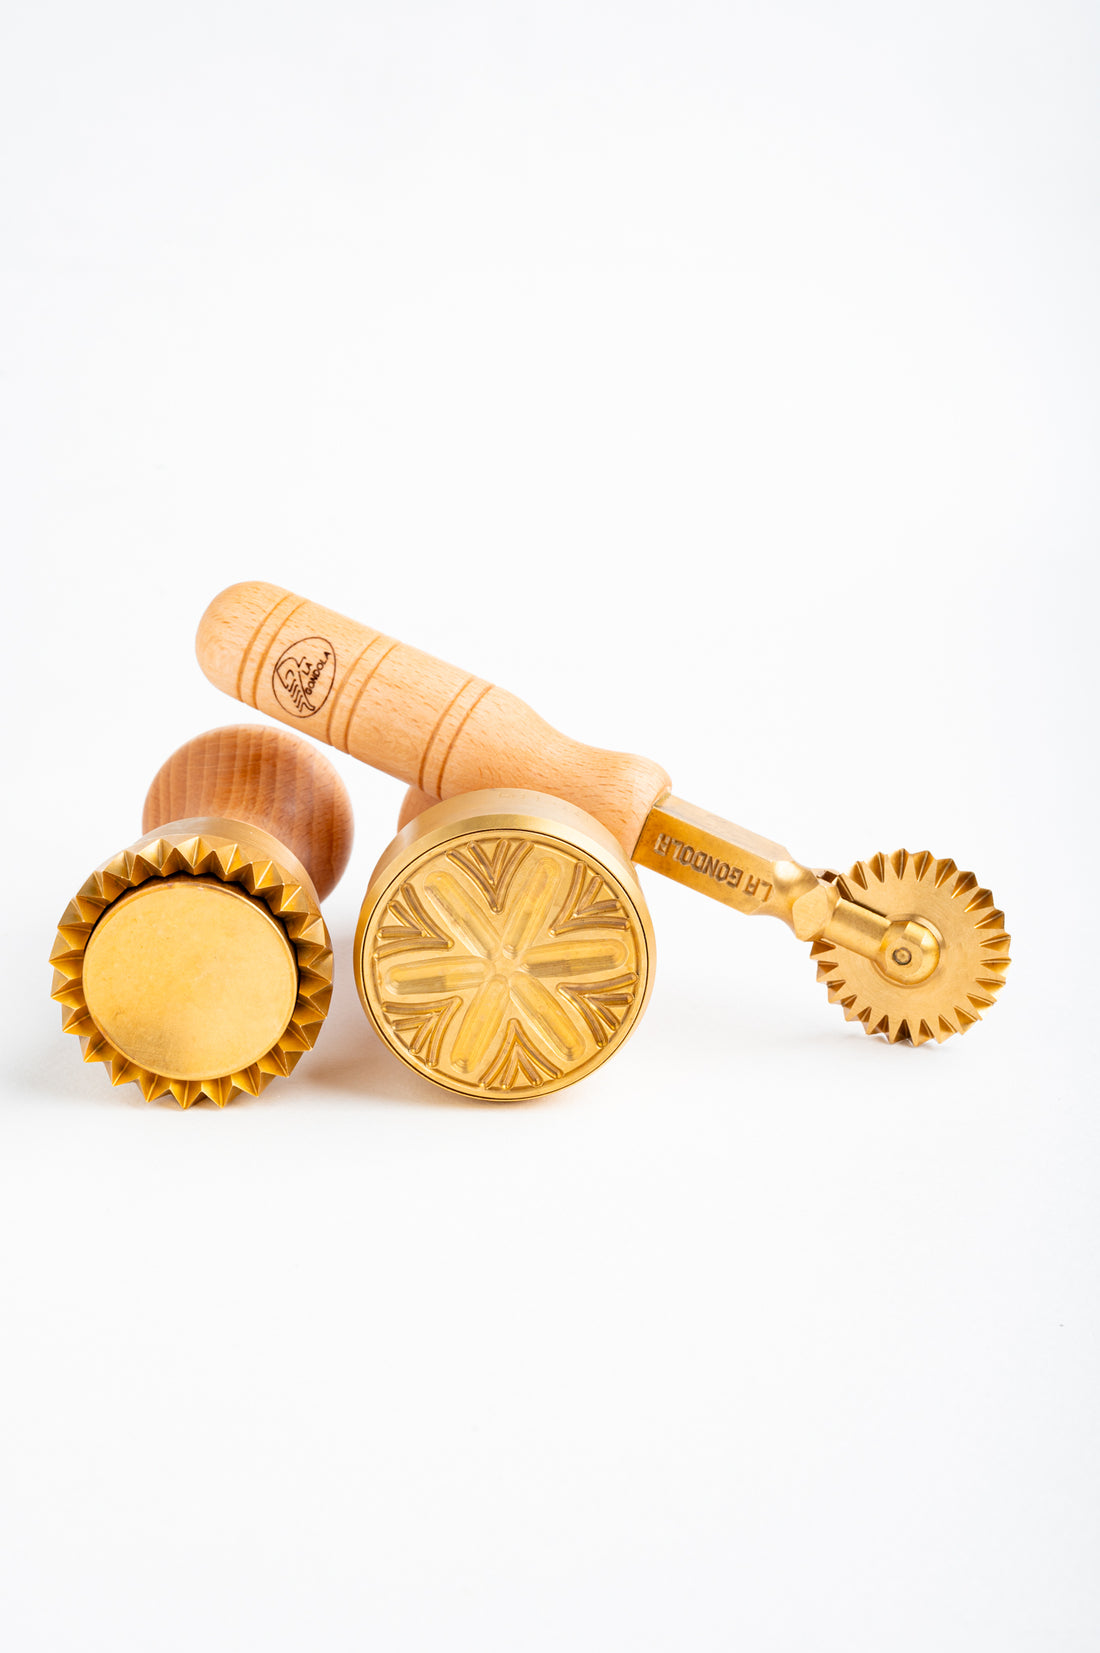 LaGondola Bundle : 1 Round Corzetti Stamp, 1 Round Professional Ravioli Stamp 50 mm and 1 Pasta Cutter Festooned in Brass and Natural Wood - IRIS